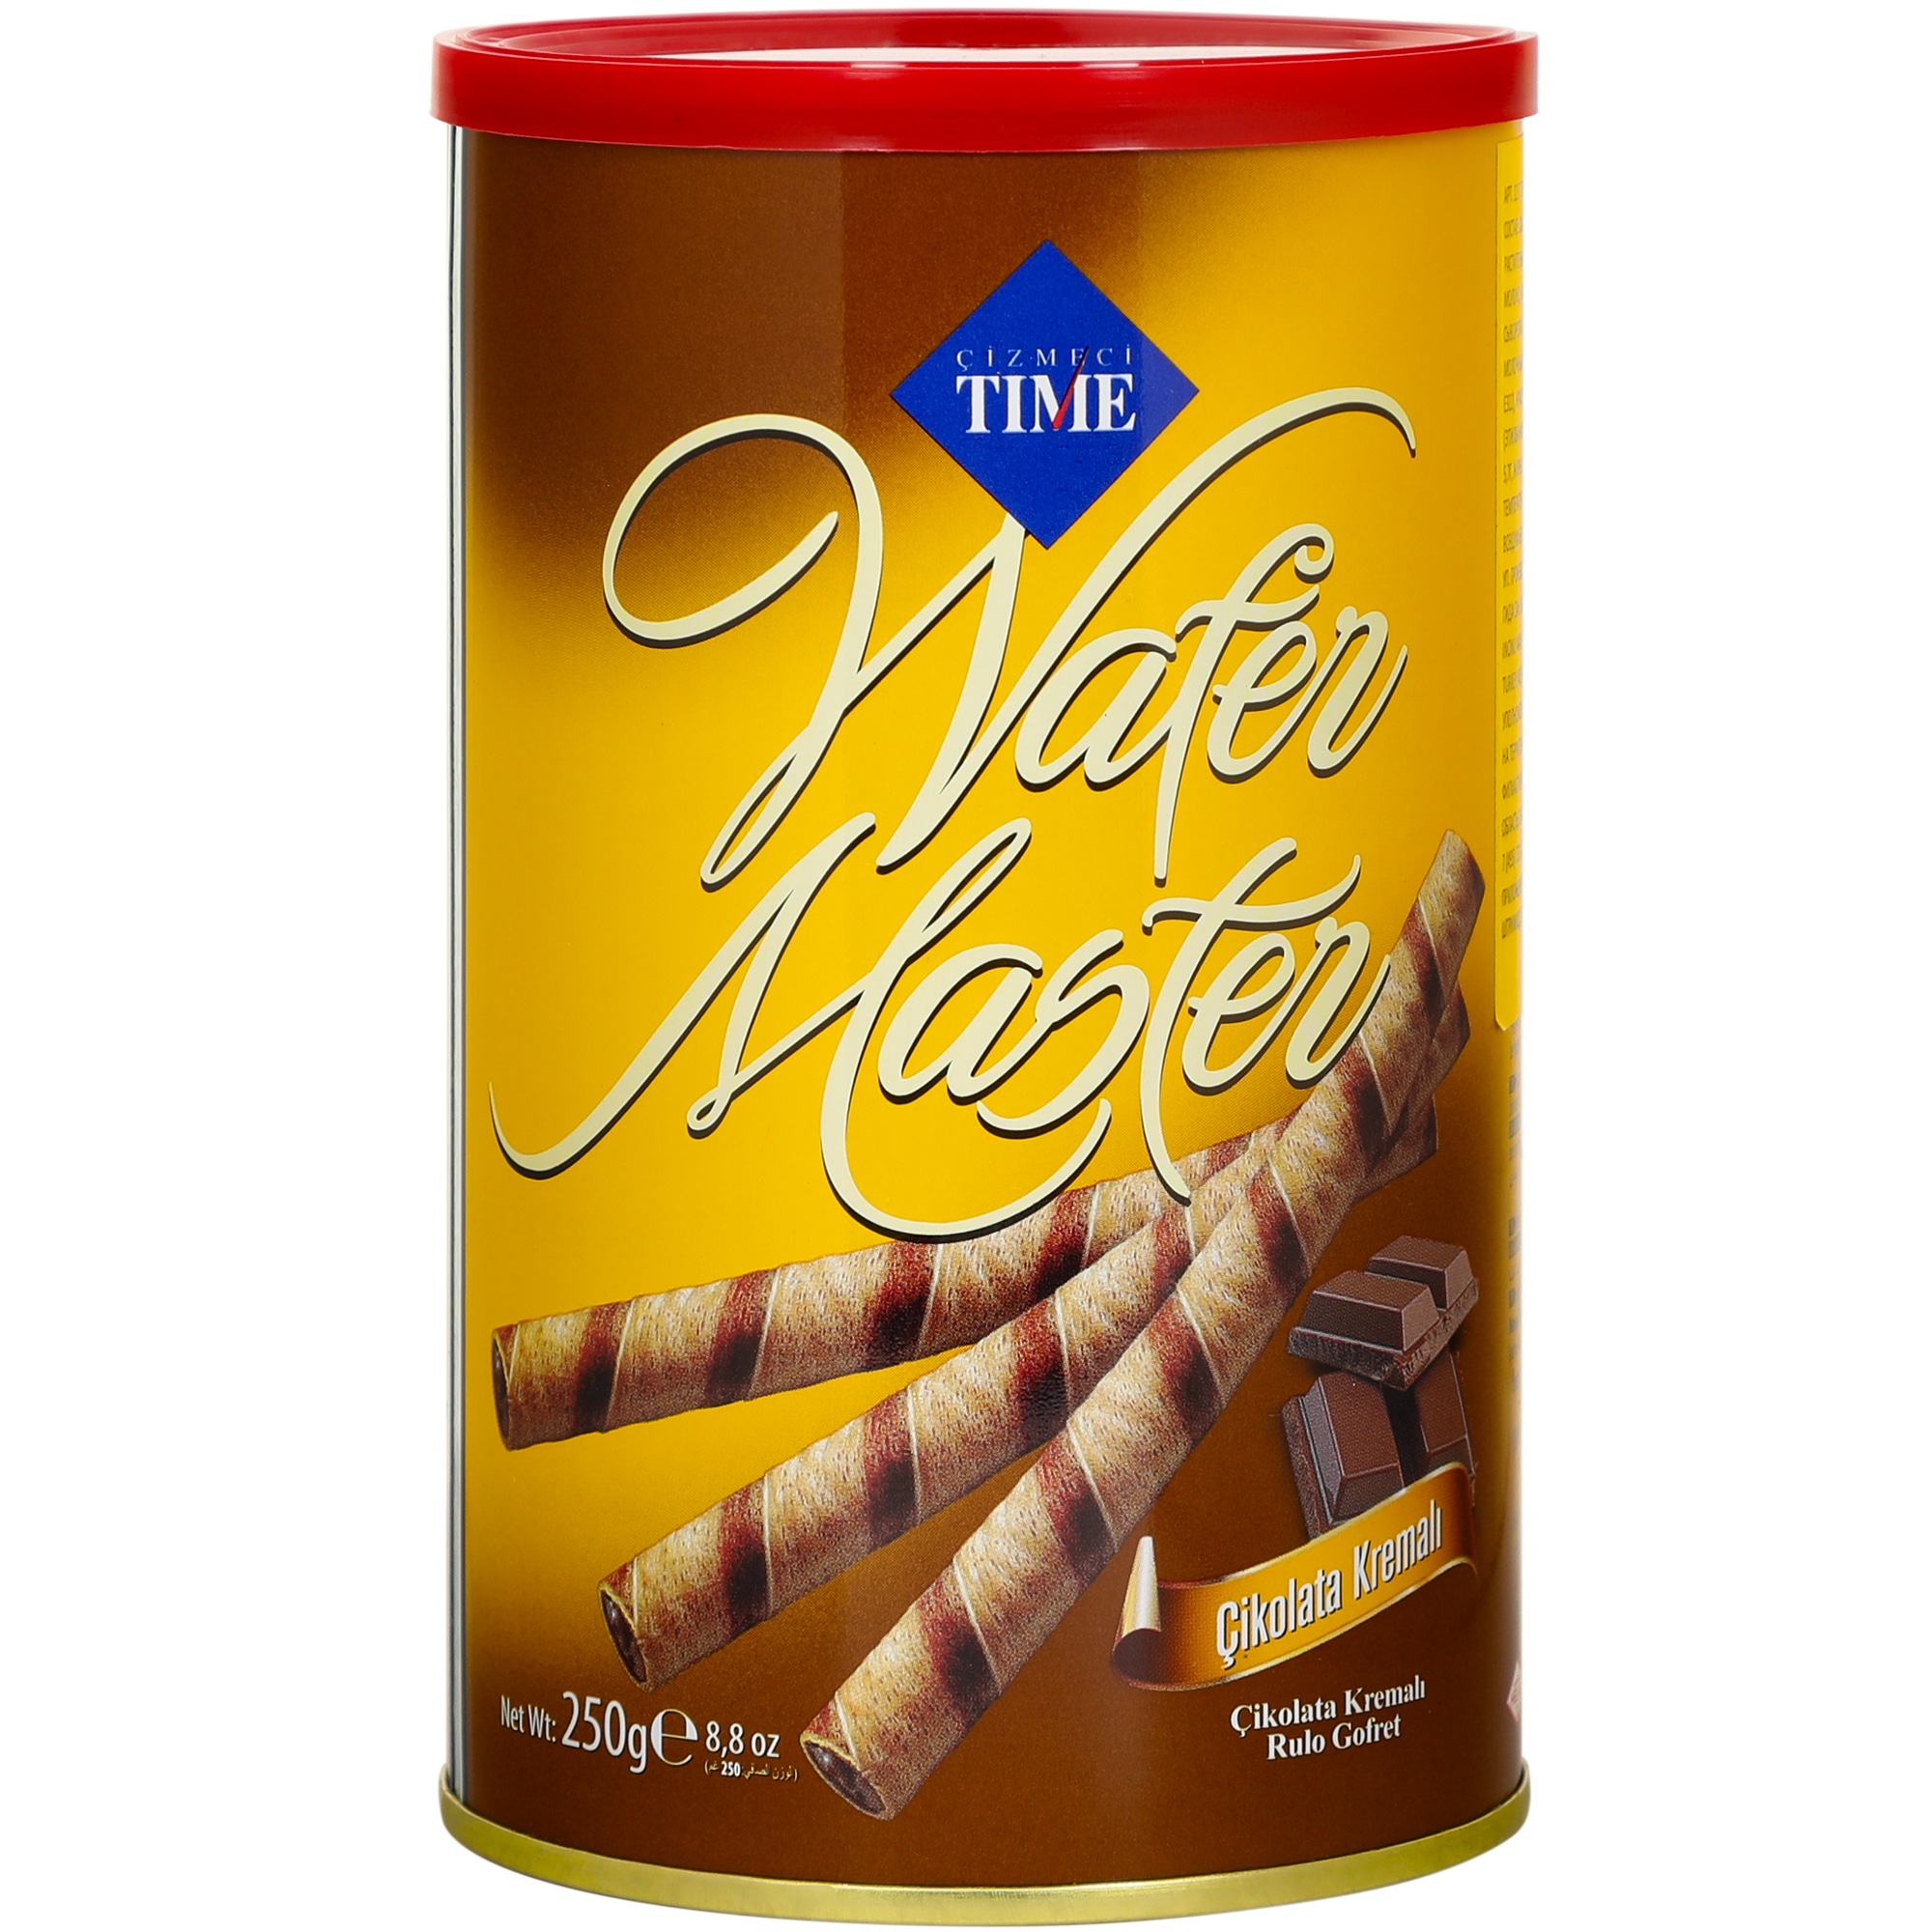 Трубочки Cizmeci Time вафельные wafer master шоколад, 250 г вафельные трубочки яшкино ореховые 190 гр